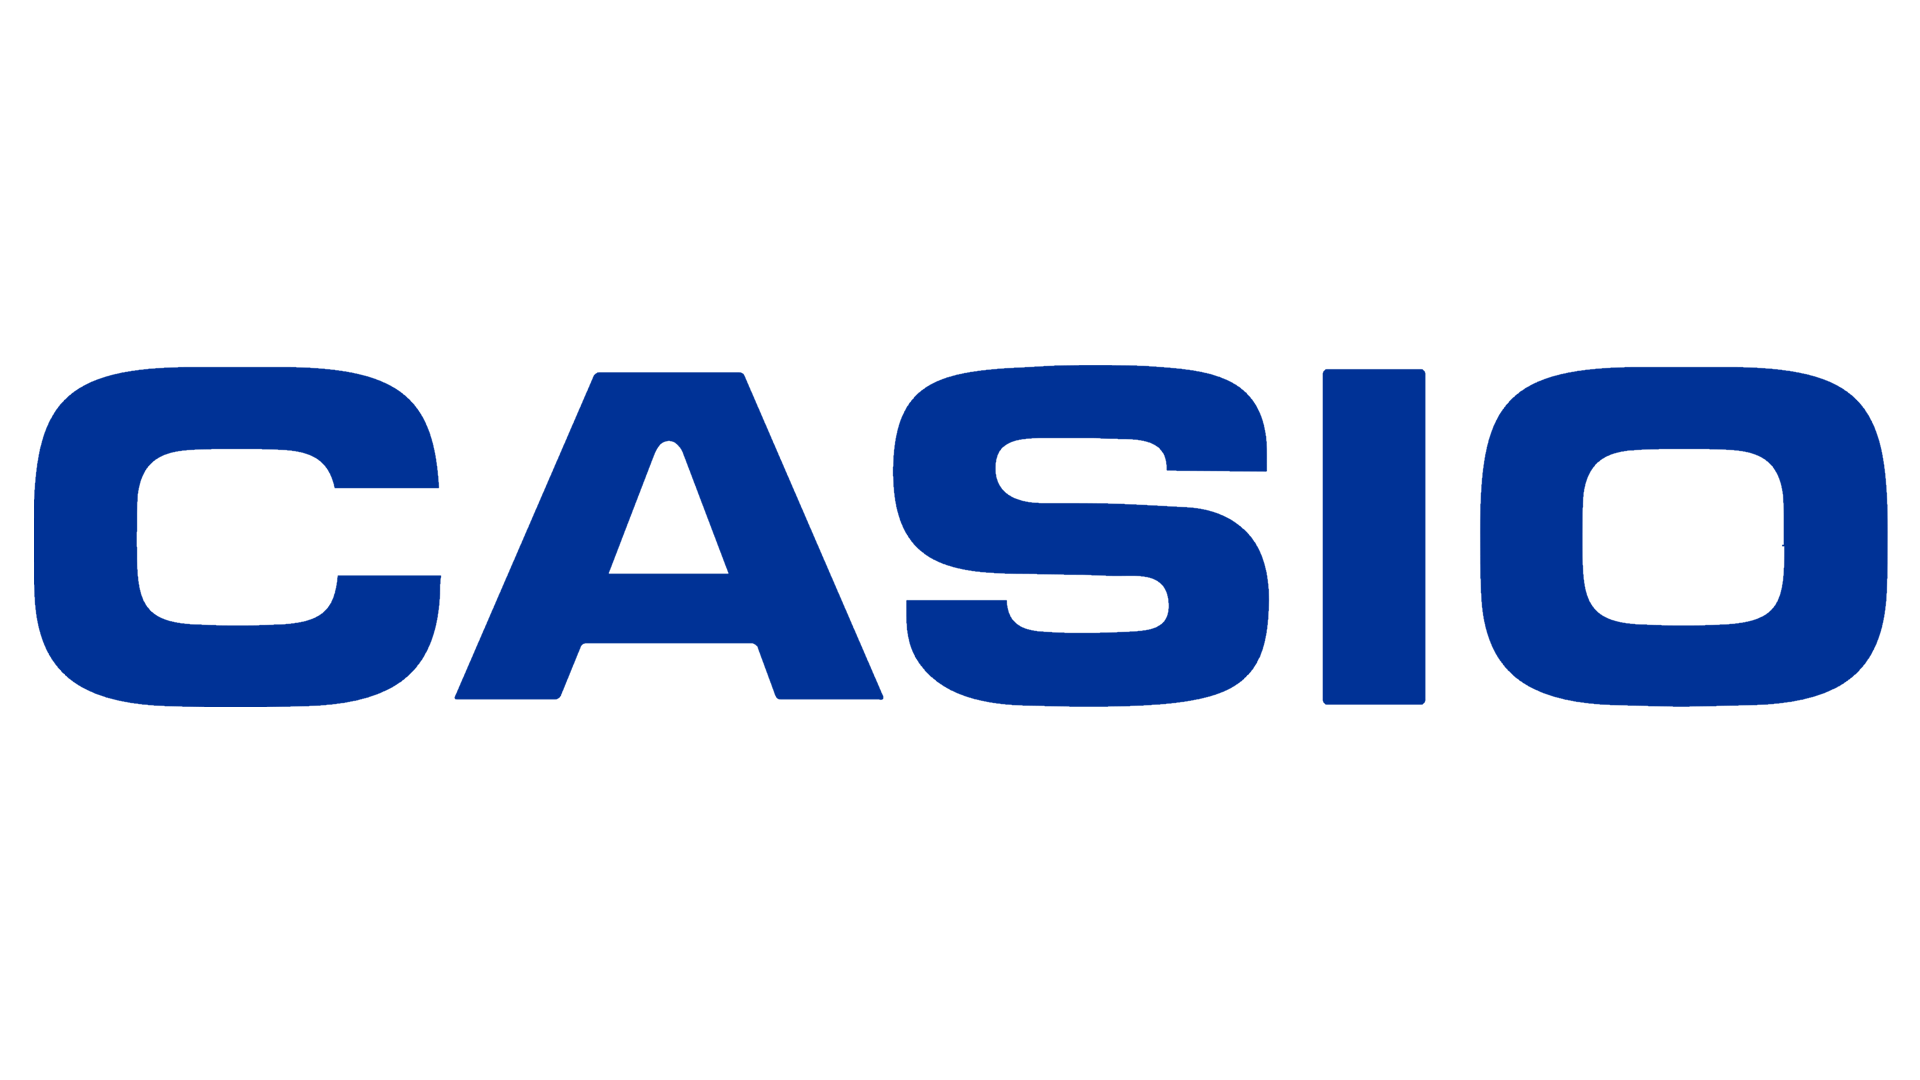 Why Casio?